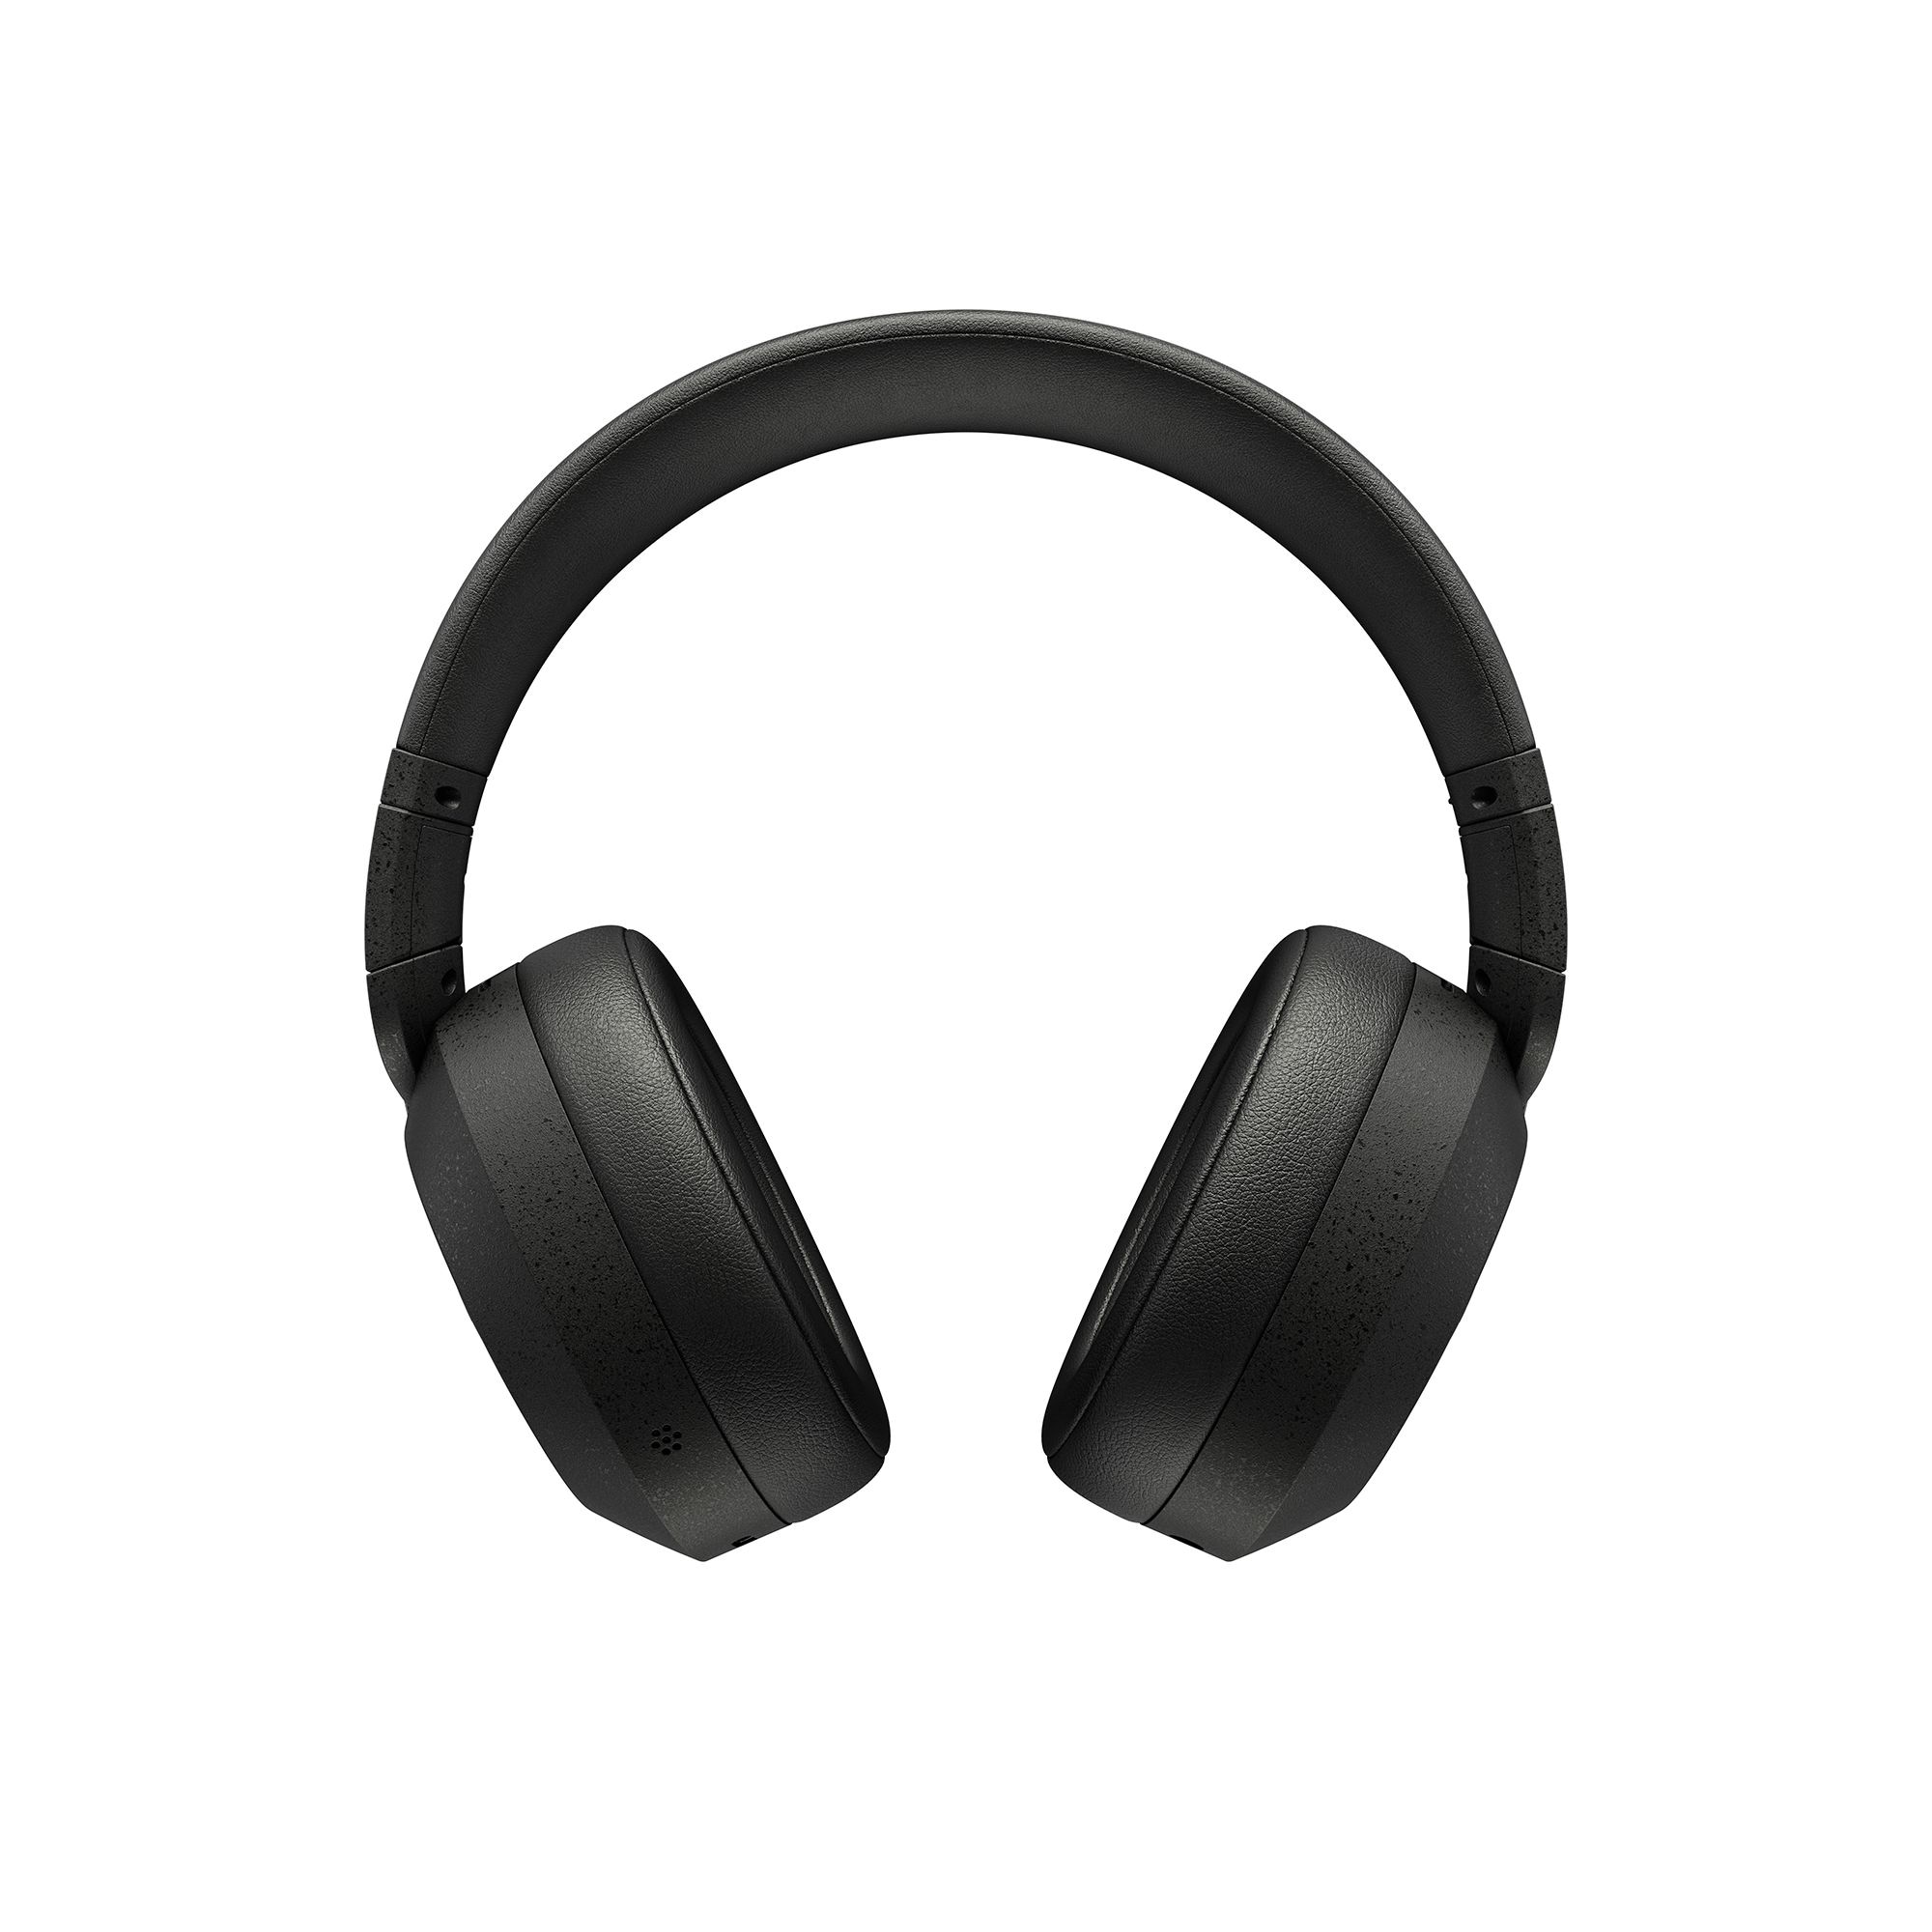 USA - Products - - Audio Headphones - Visual Specs - Yamaha & YH-E700B